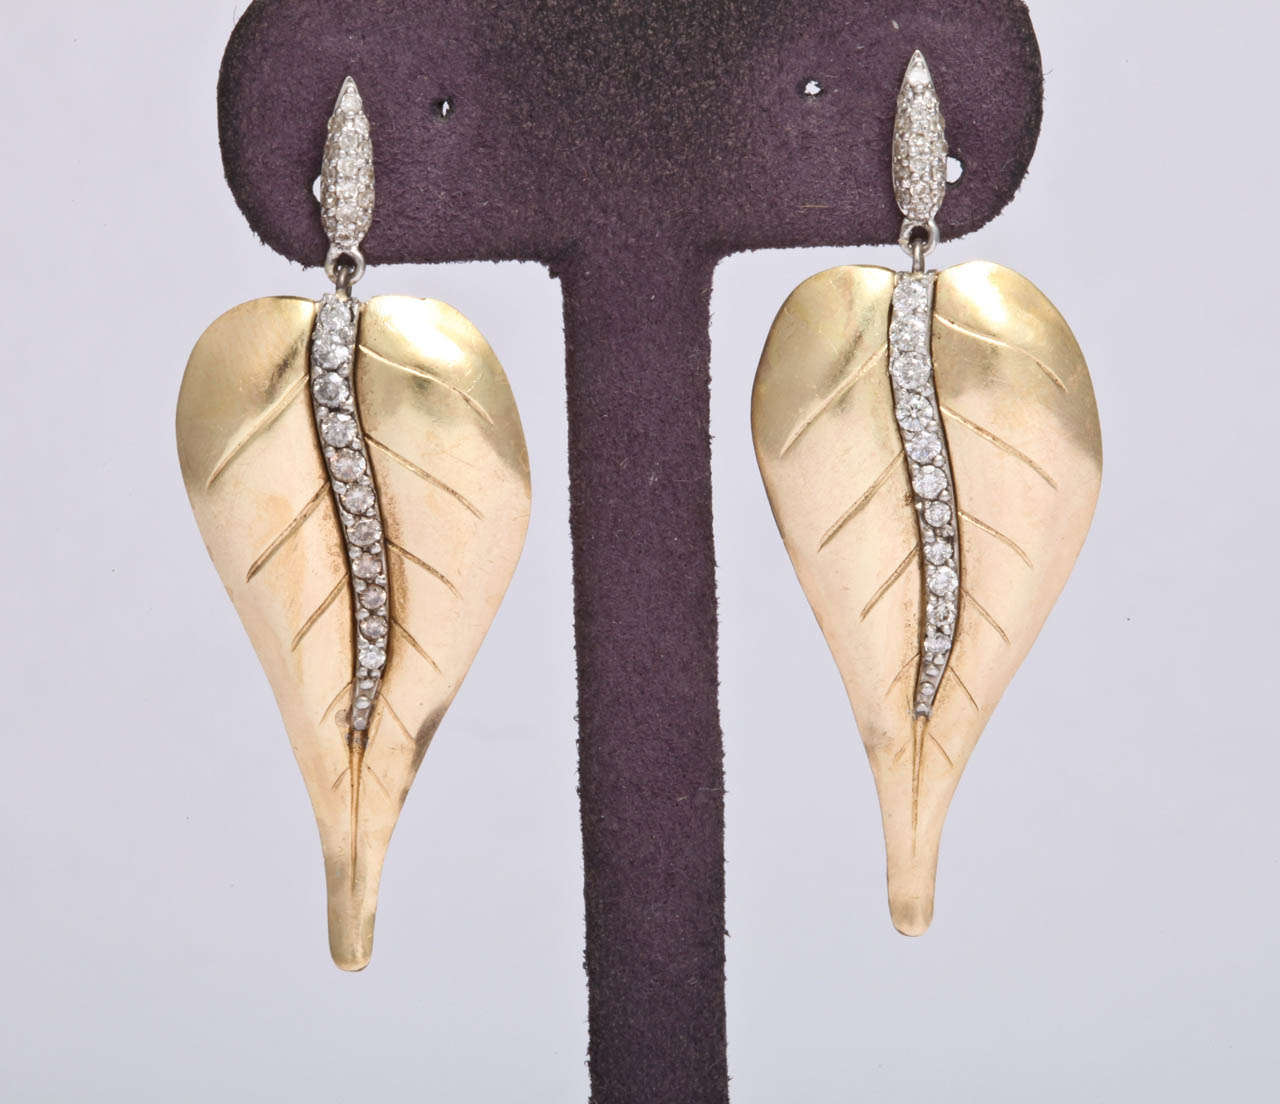 Chic 18k yellow gold leaf motif earrings featuring a diamond midrib.